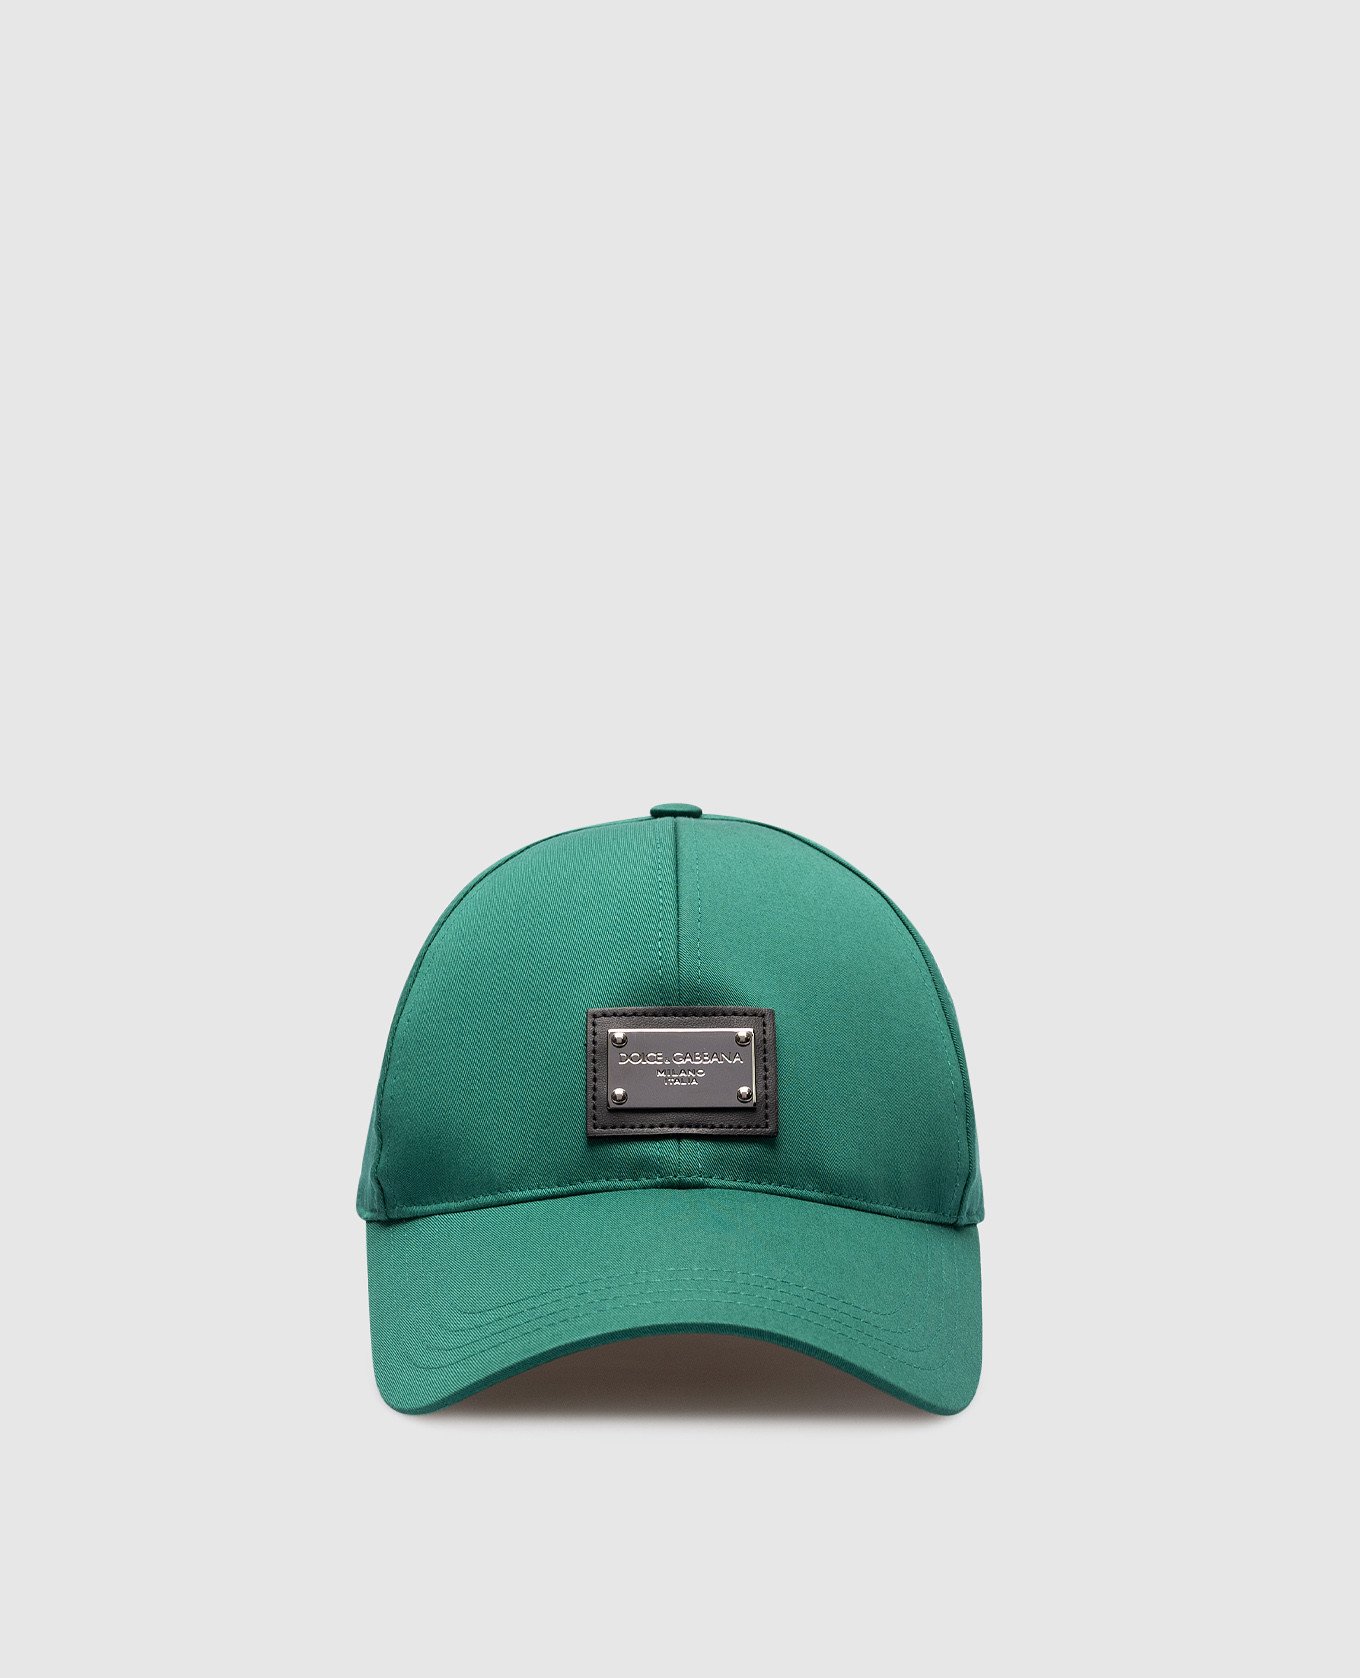 Green cap with logo